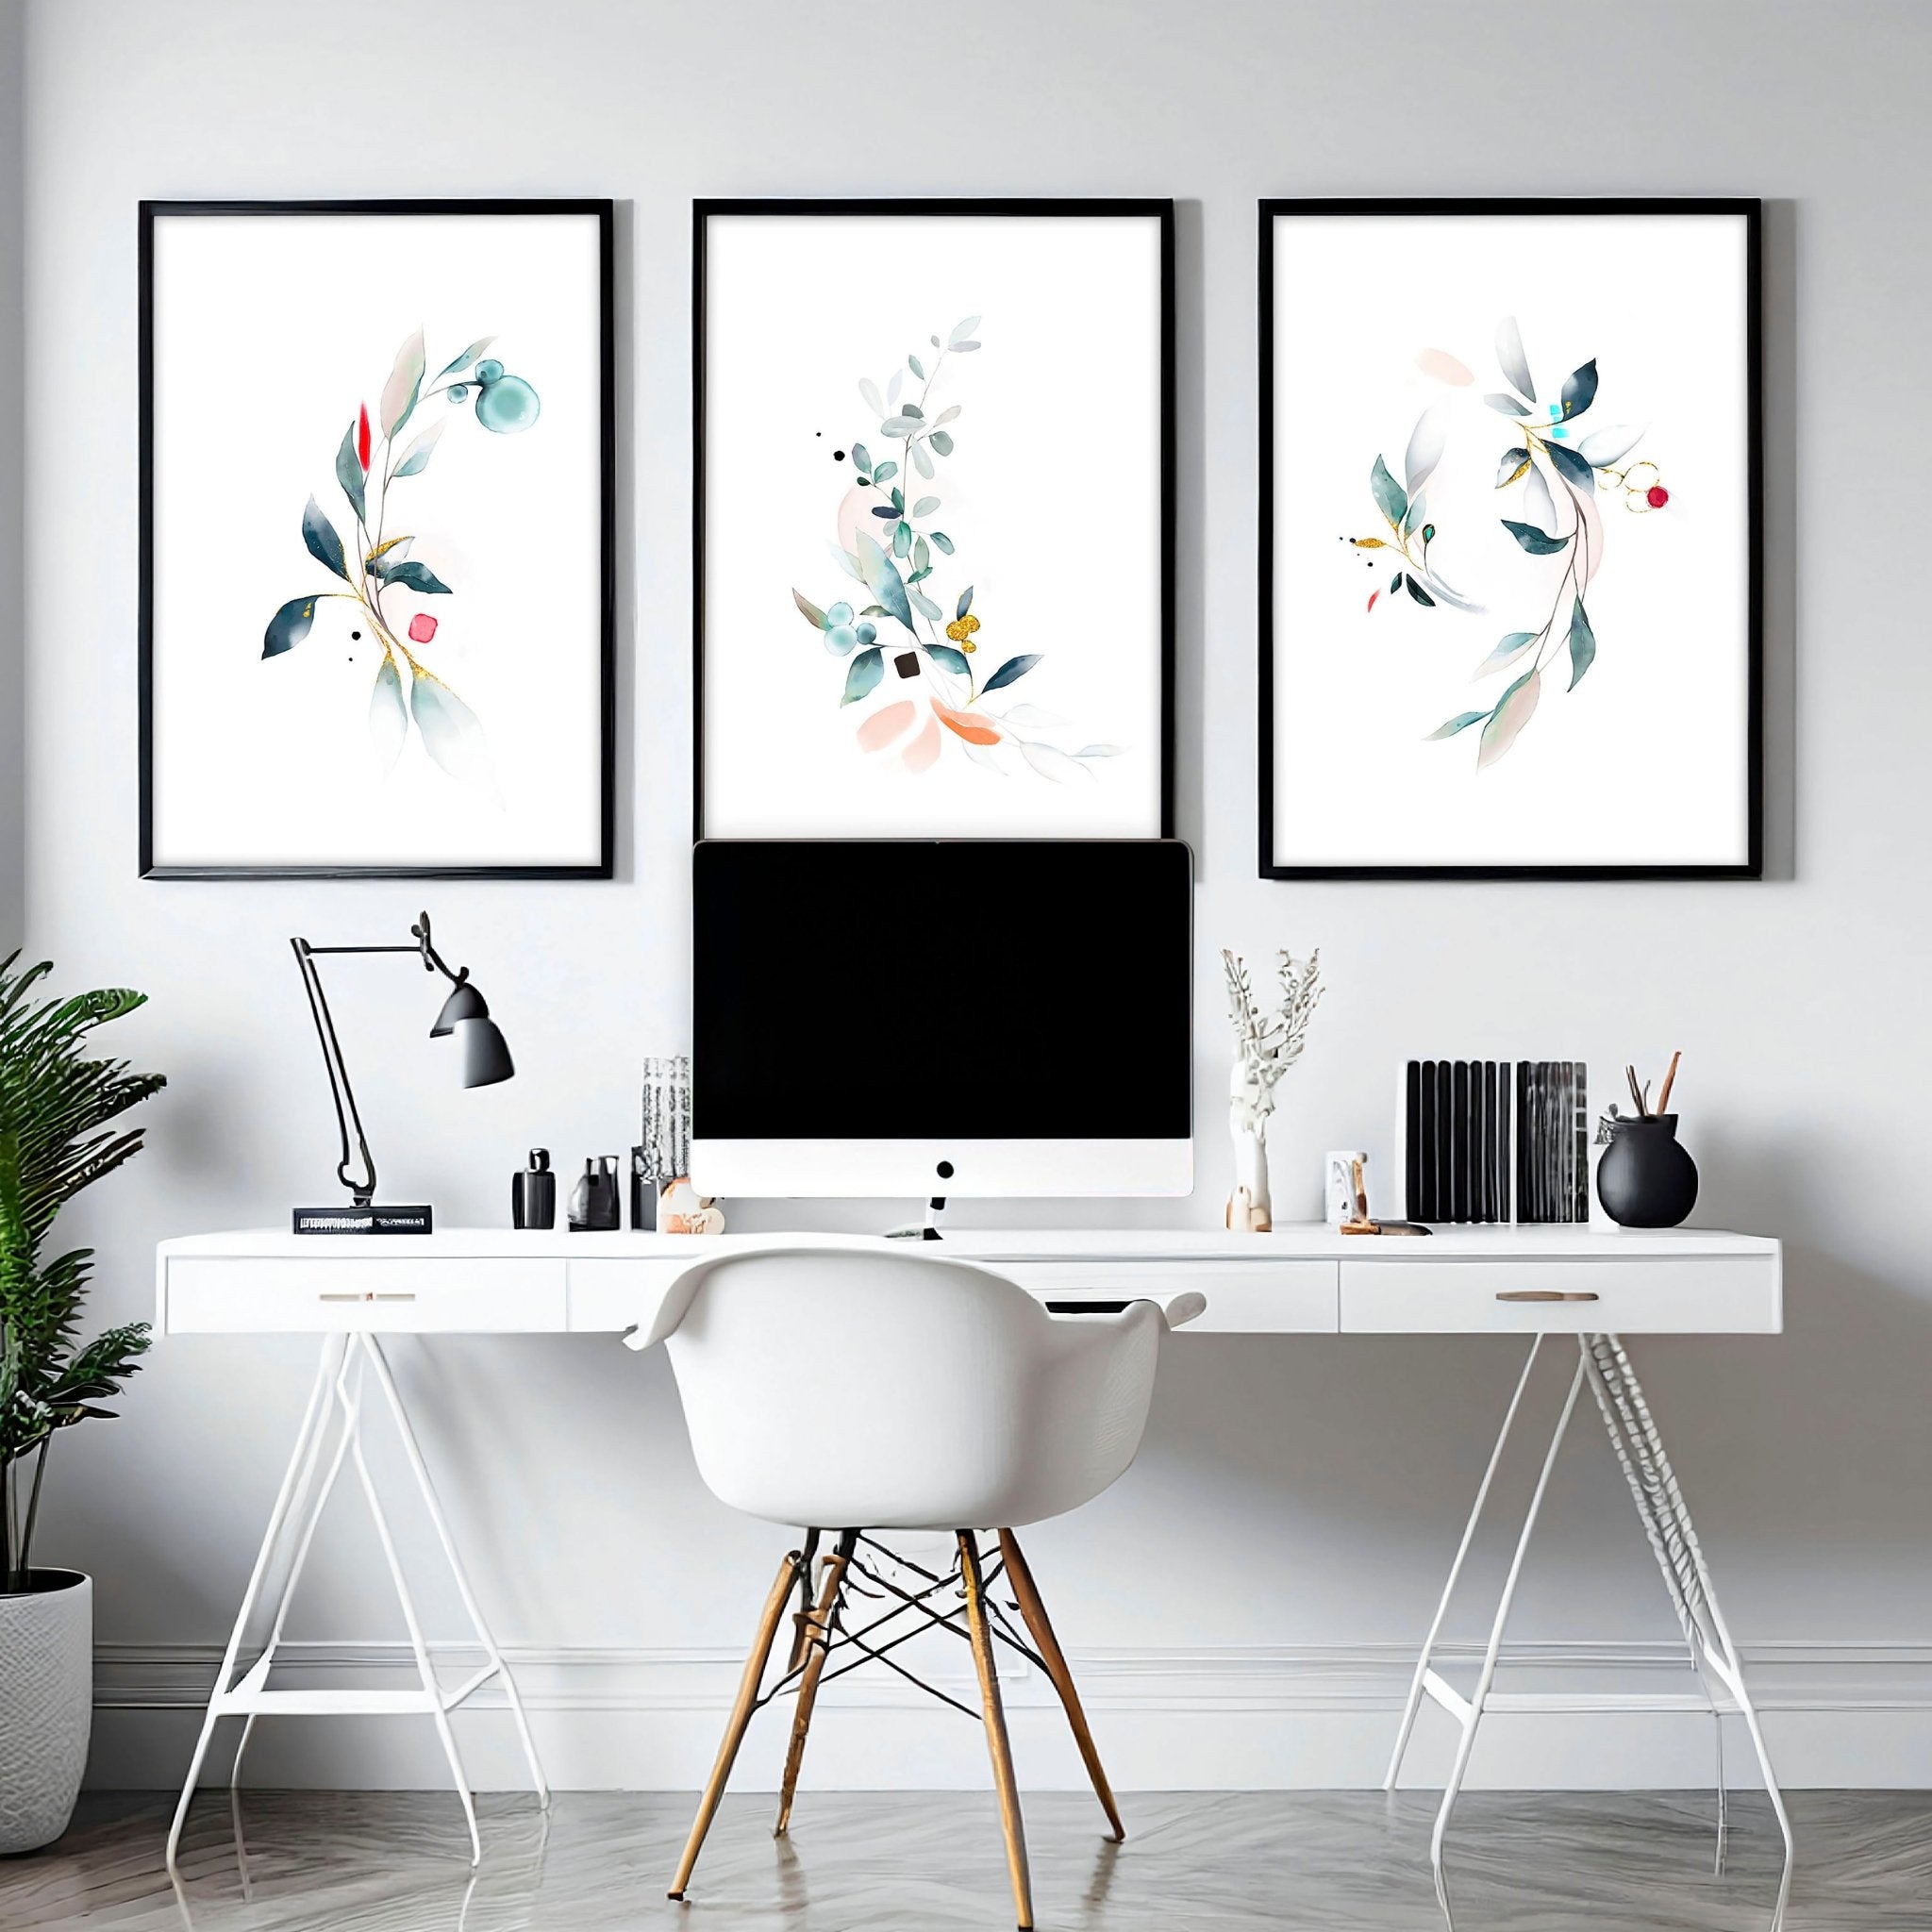 Artwork for office | set of 3 wall art prints